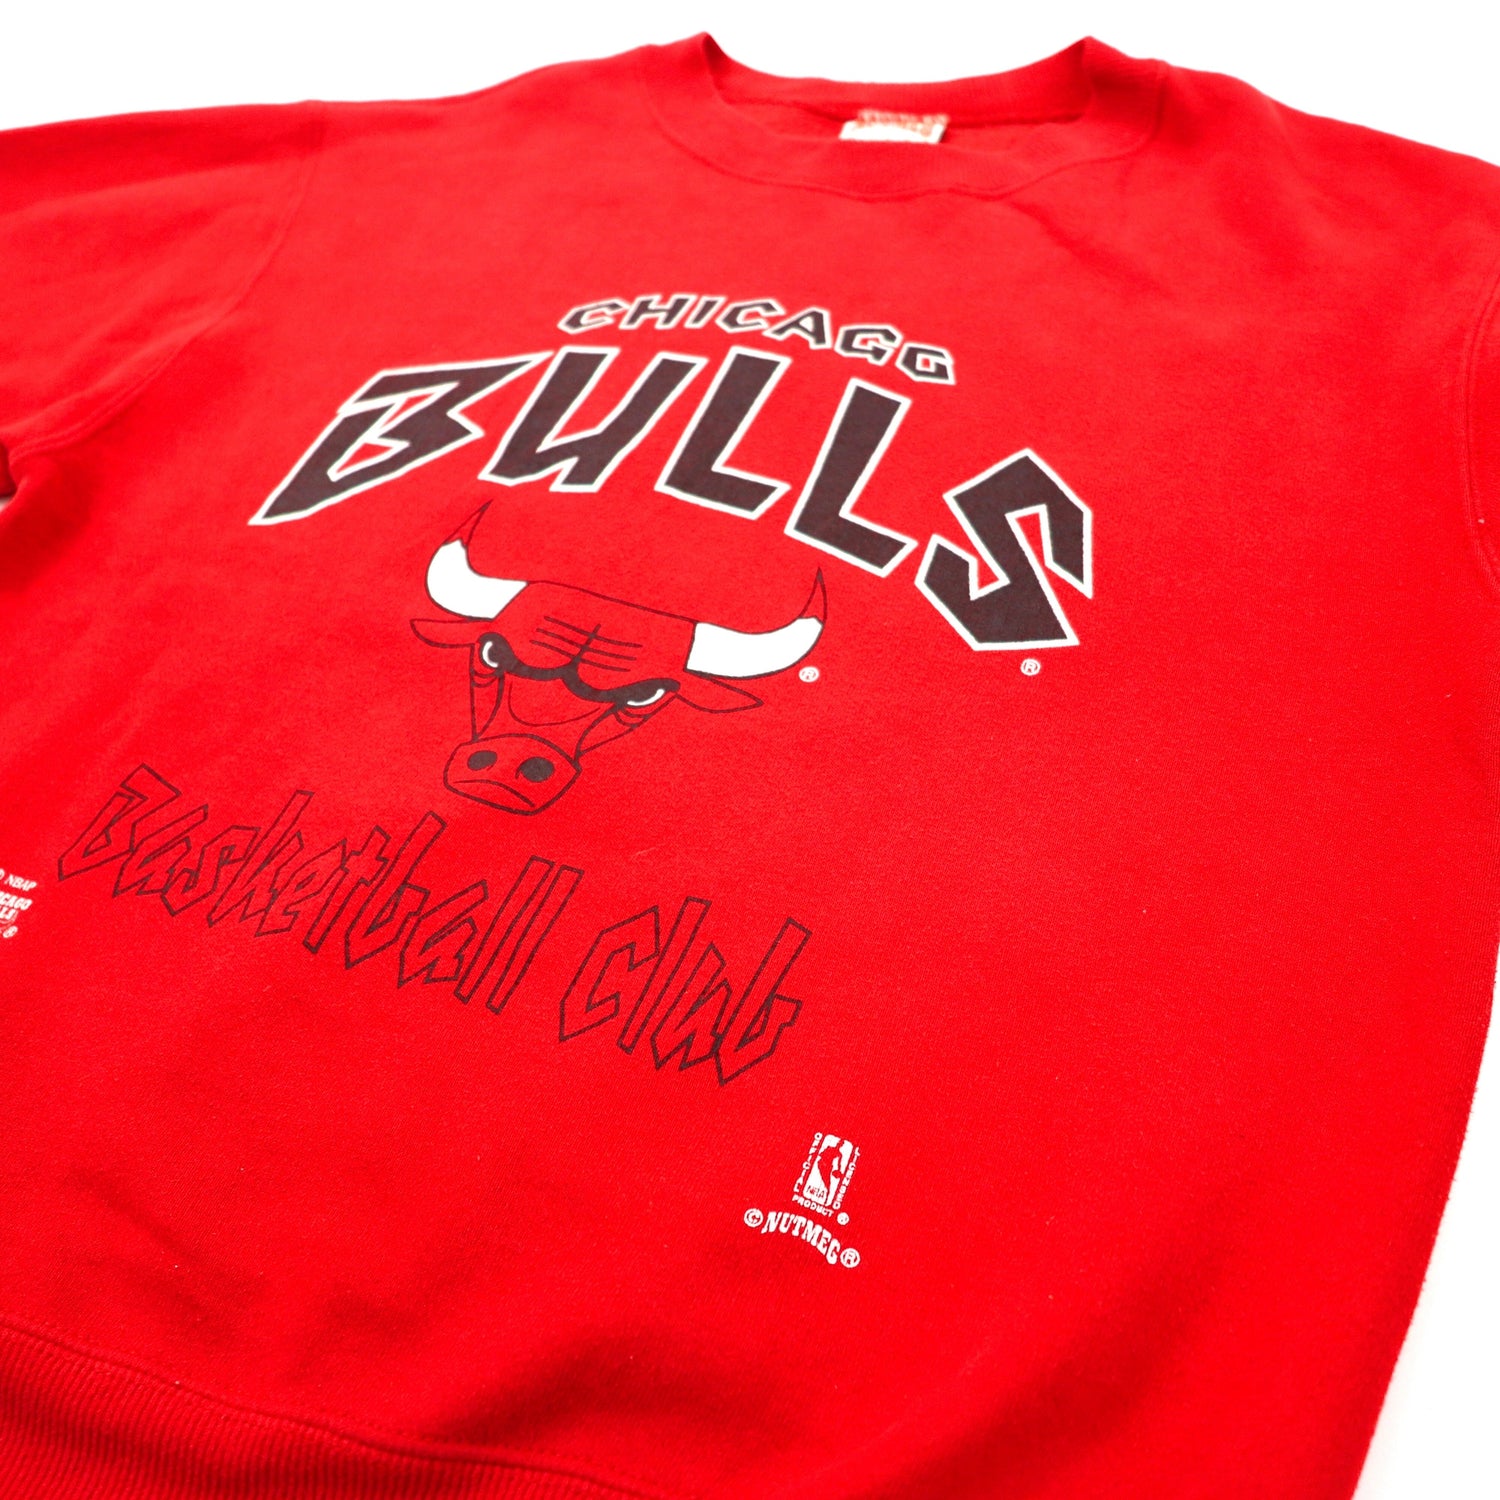 NutMeg Sweatshirt L Red Chicago Bulls 90s Made in USA NBA – 日本然